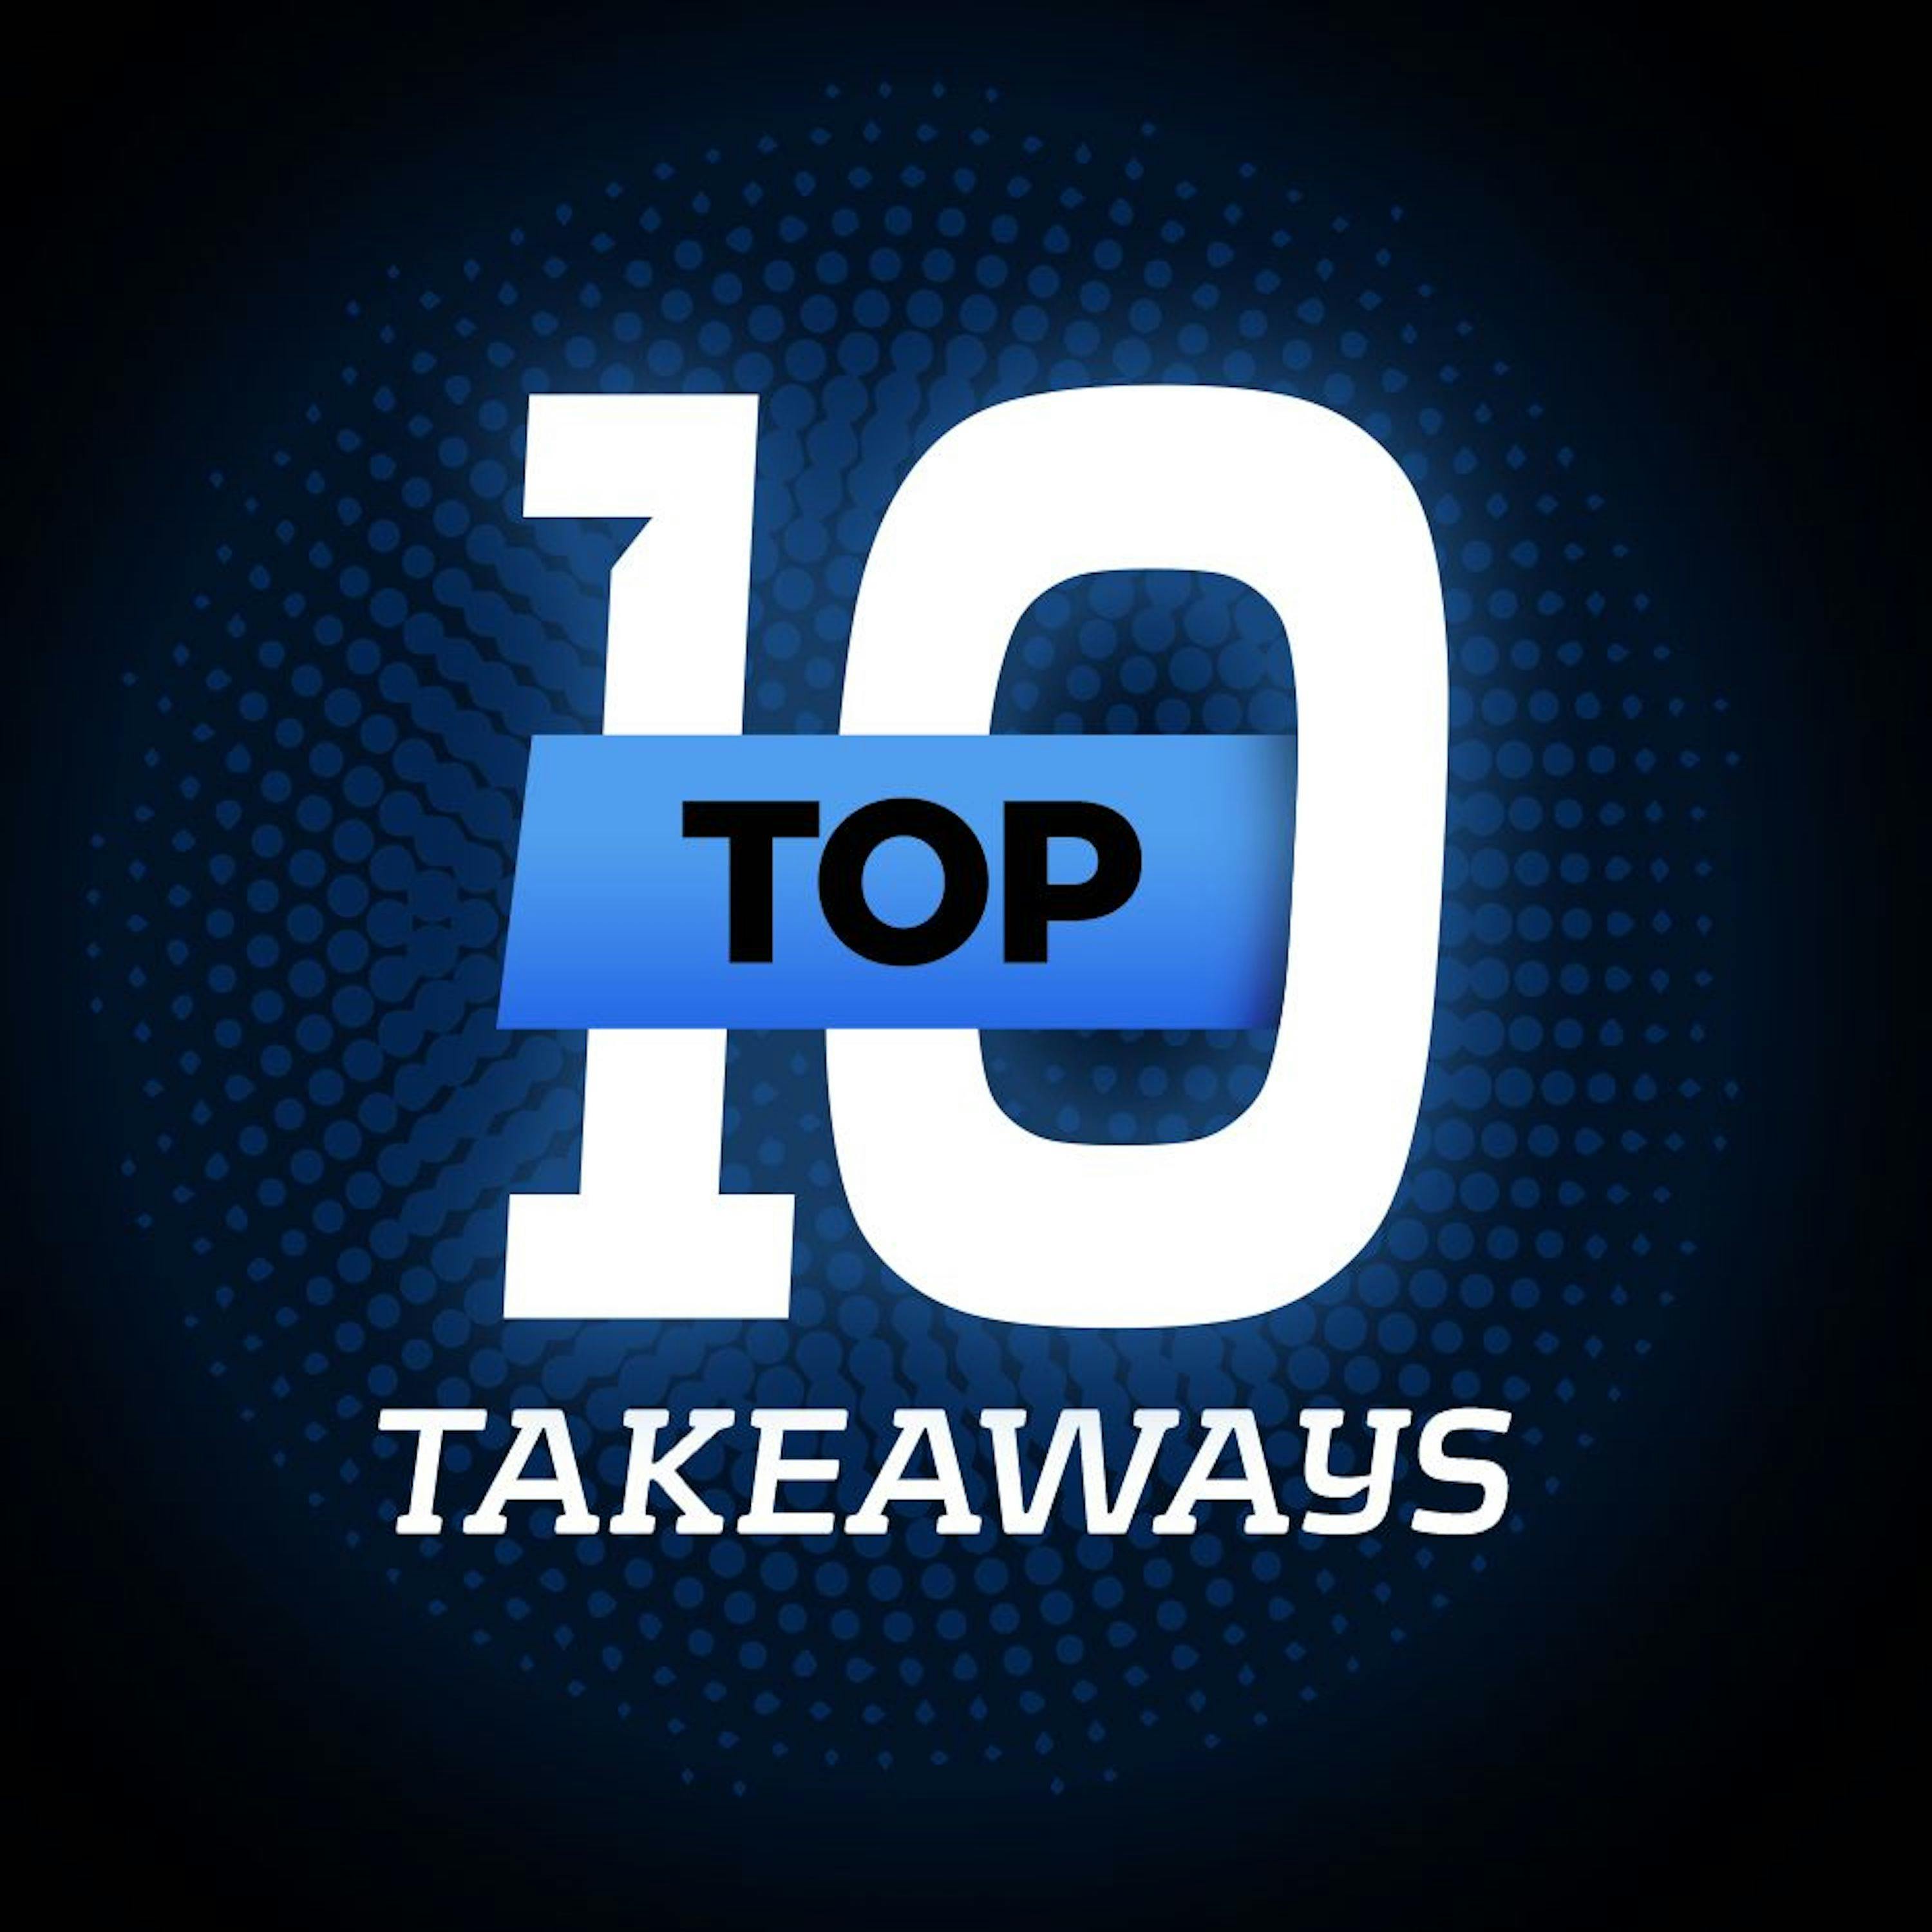 Top-10 Takeaways - Rachaad White in Elite Company 